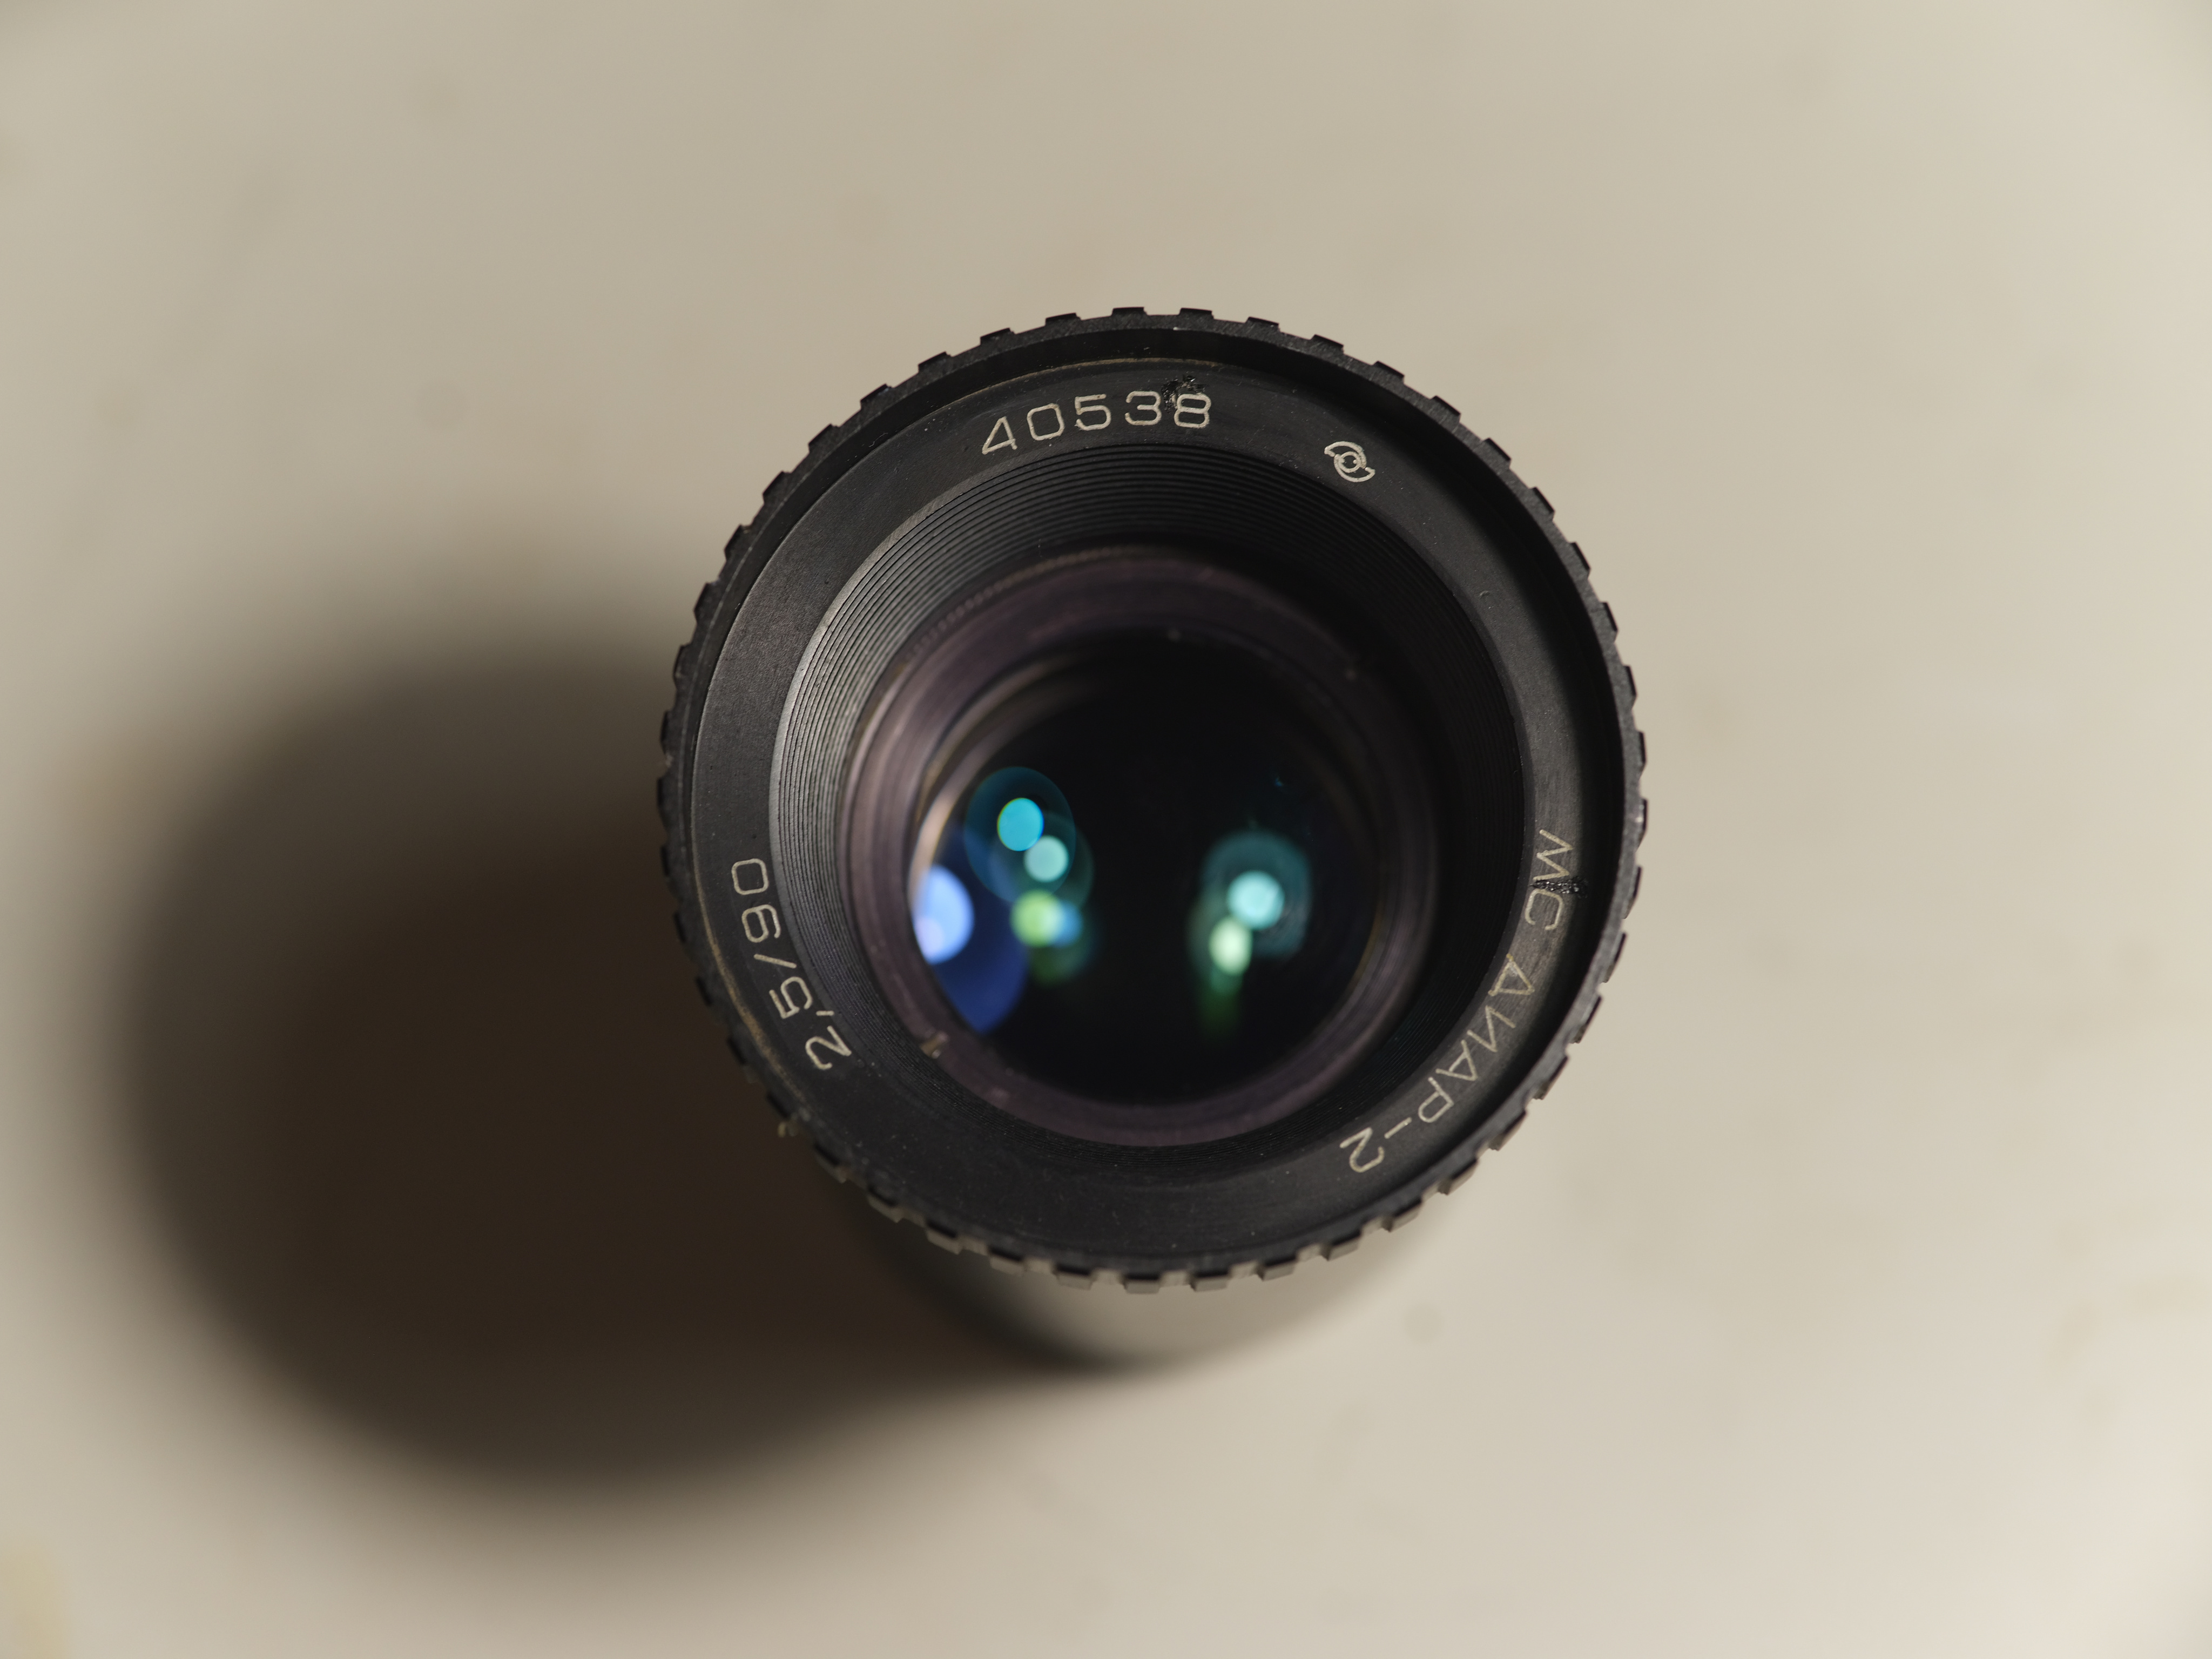 Фотография объектива МС Диар-2 с нетронутым линзоблоком. Фото предоставил Андрей Андреев